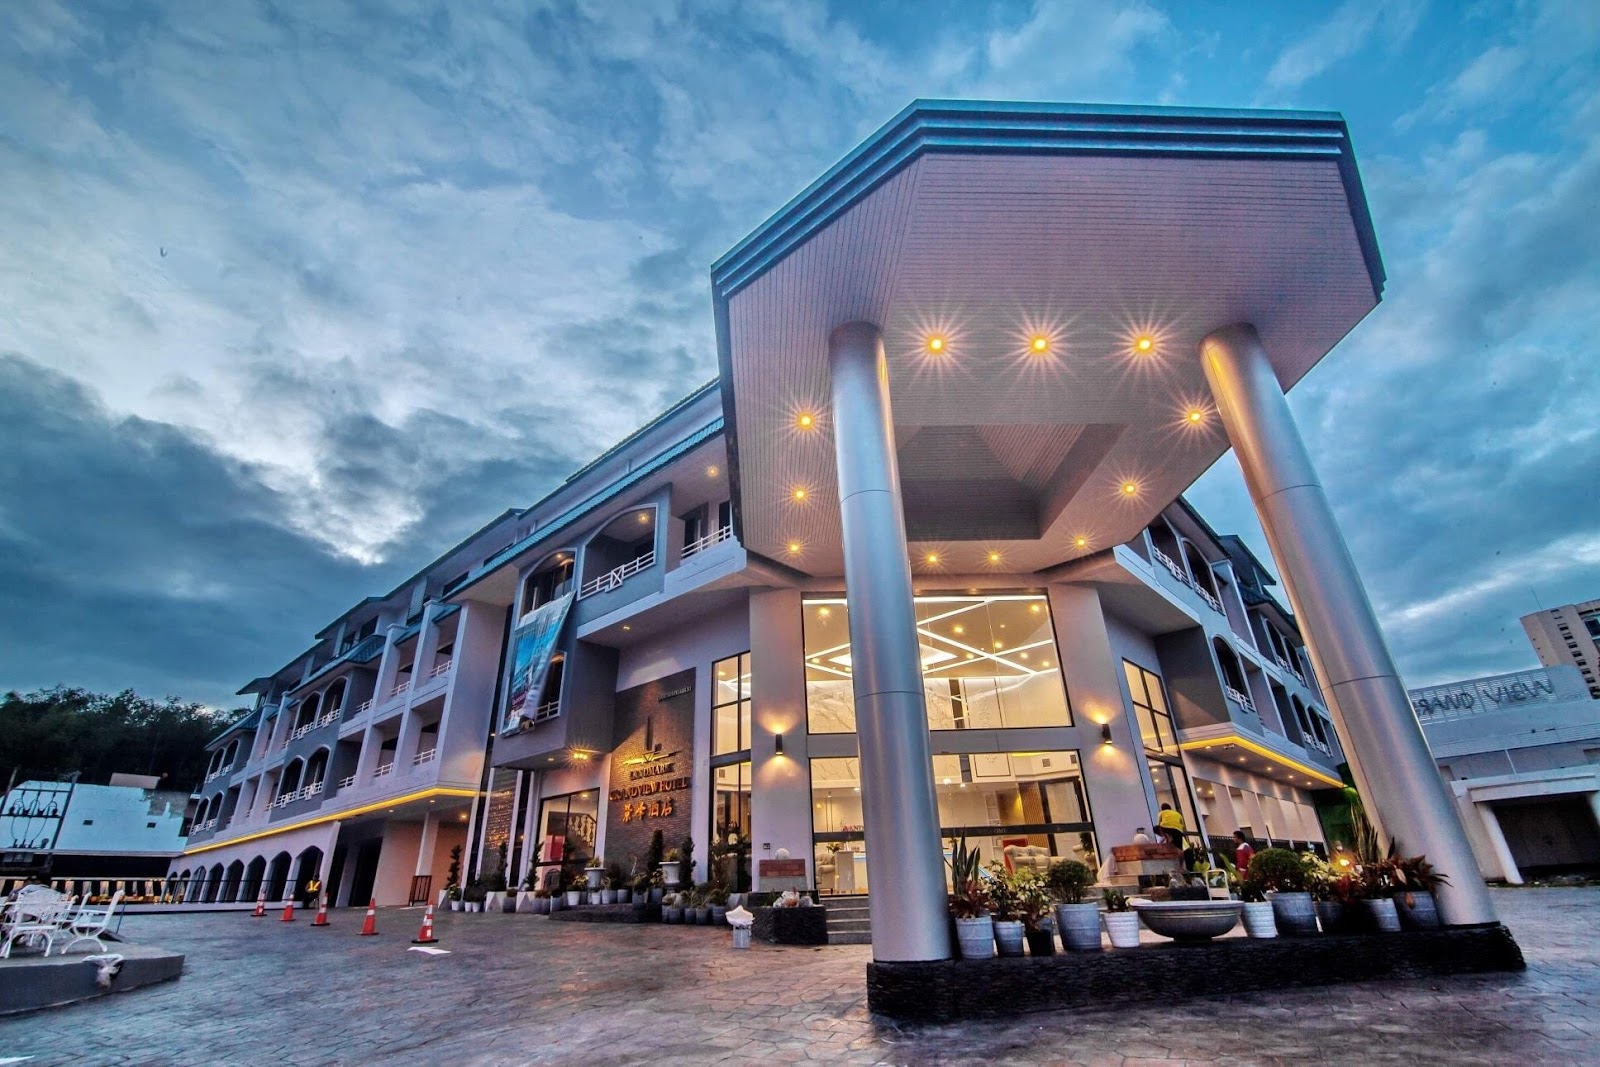 2. Grand View Landmark Betong Hotel - โรงแรมแกรนด์วิว-แลนด์มาร์ค เบตง